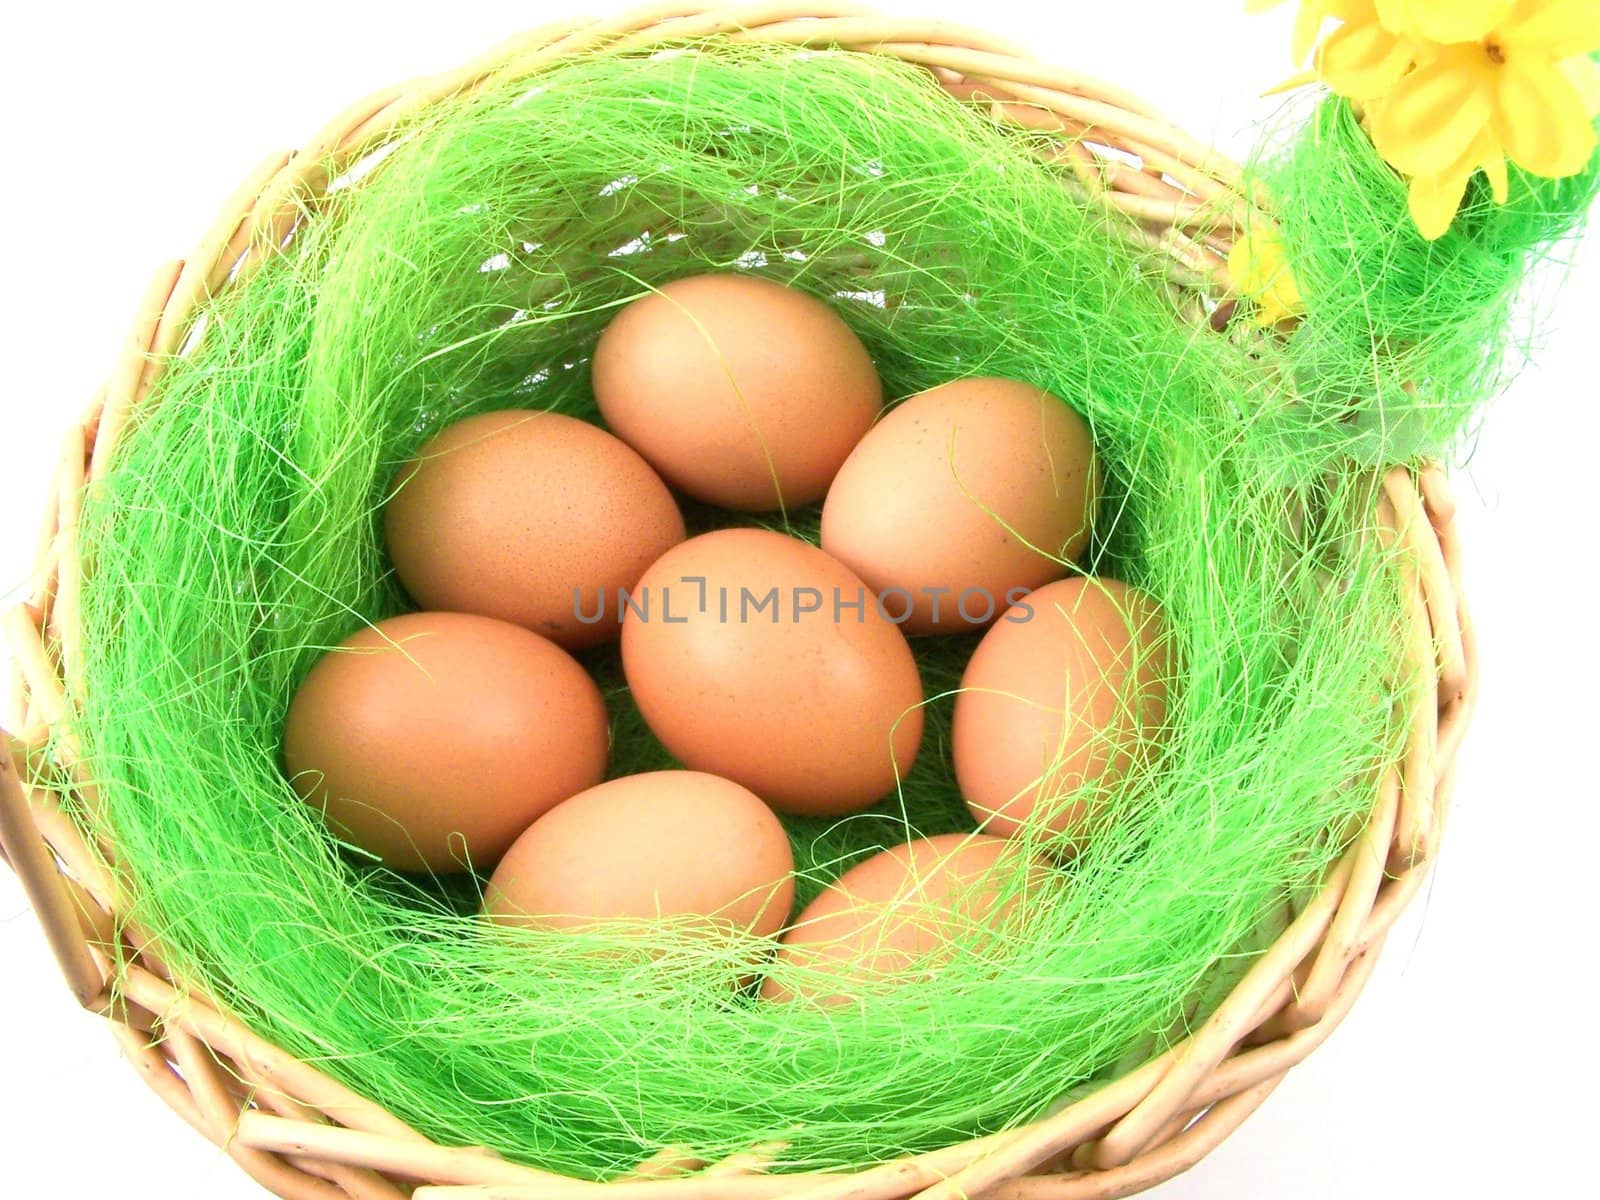 wicker basket with eggs